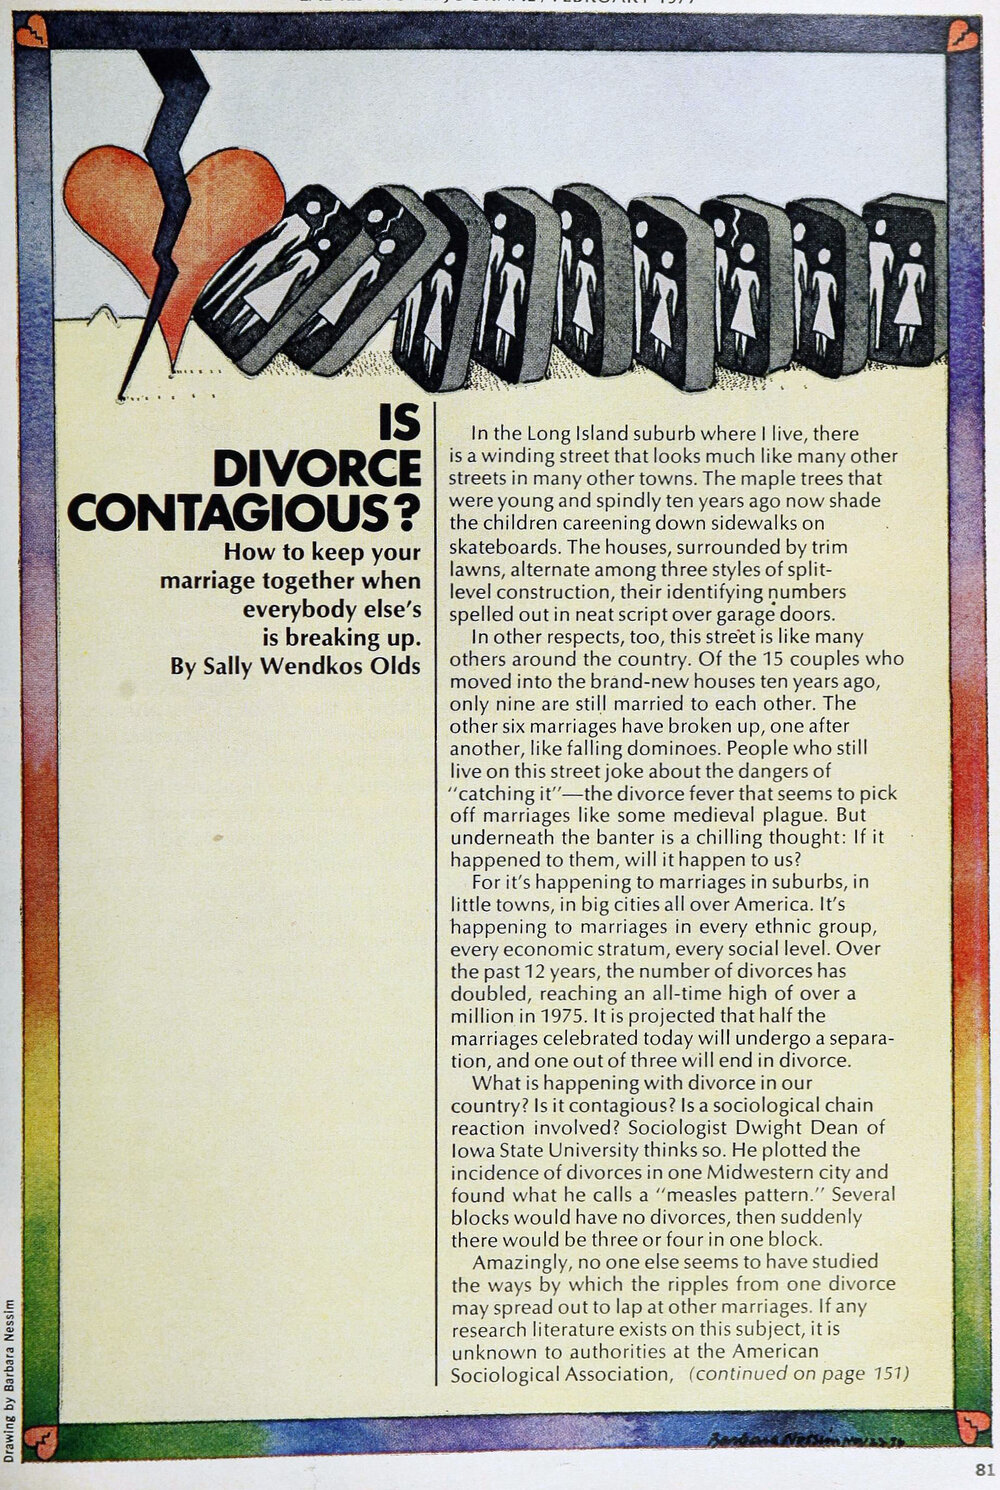 Ladies' Home Journal, February 1977